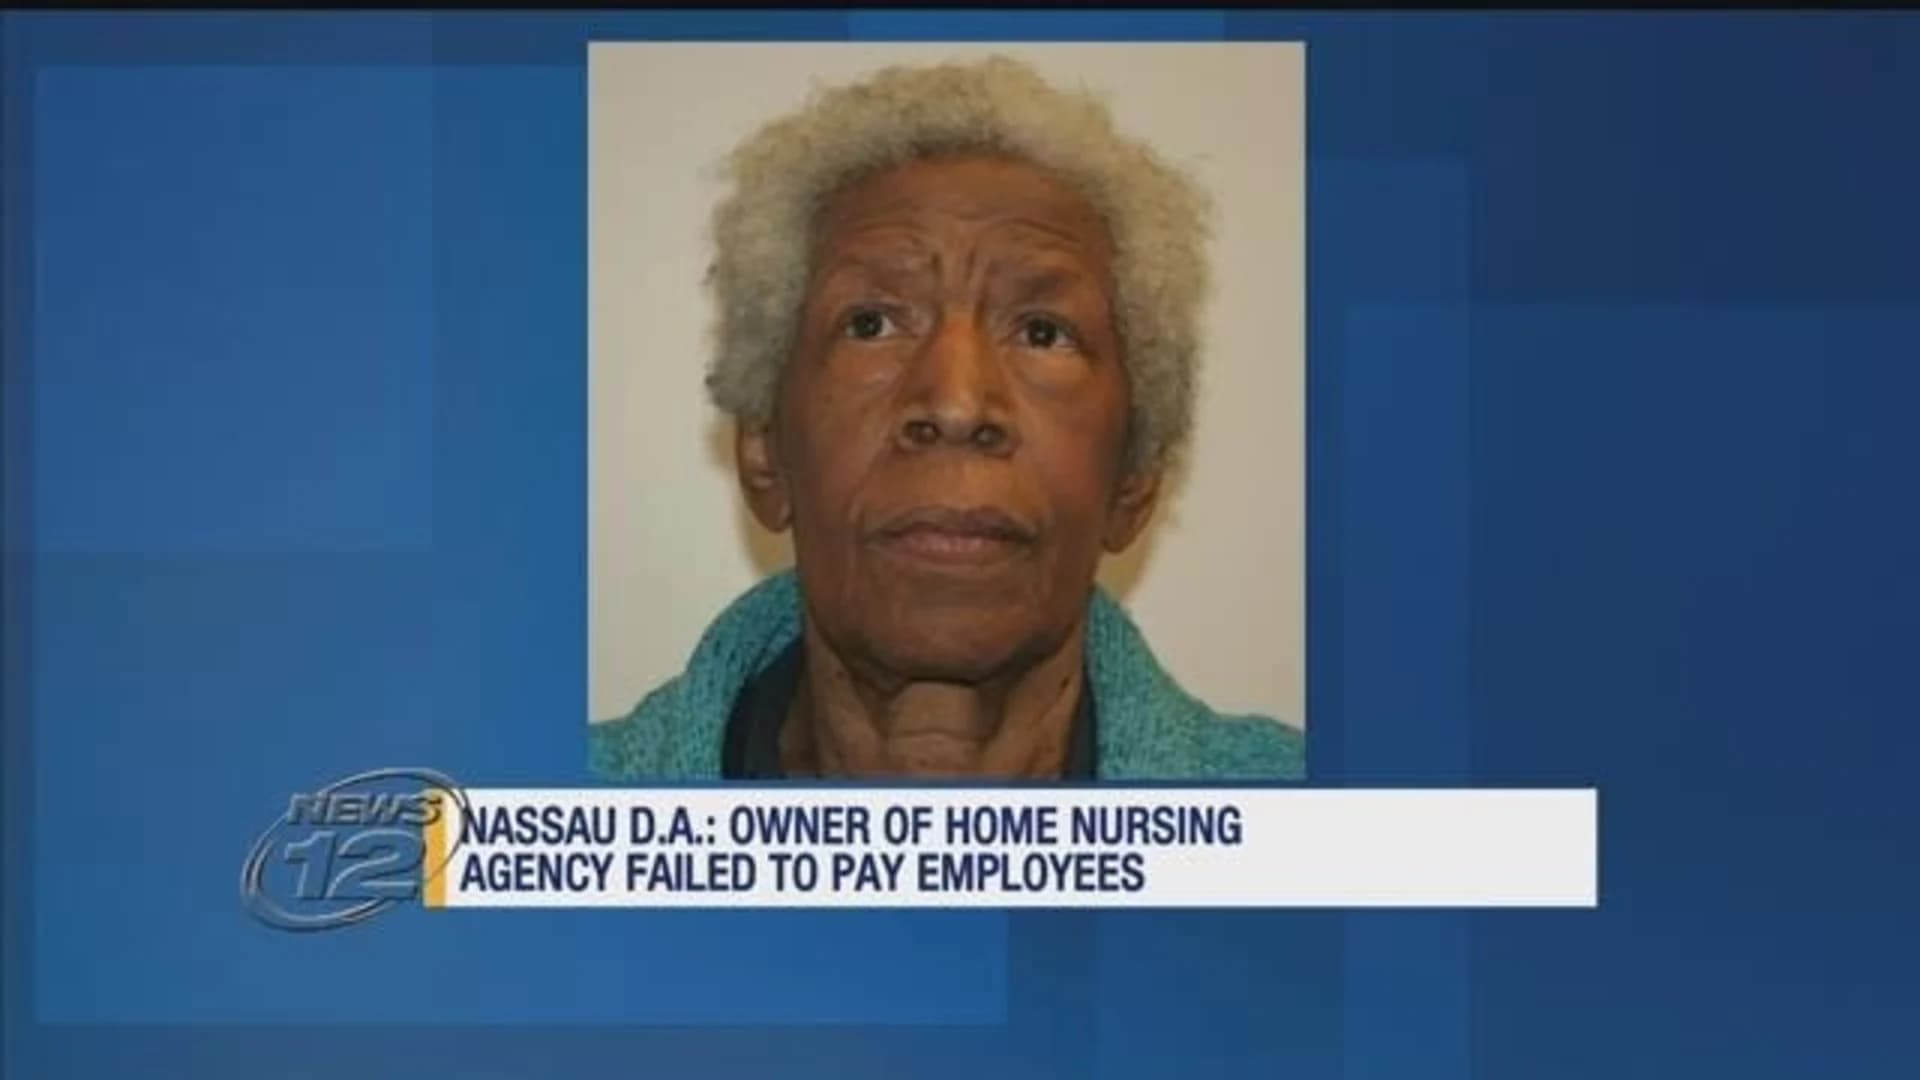 Nassau DA: Owner of nursing agency failed to pay employees